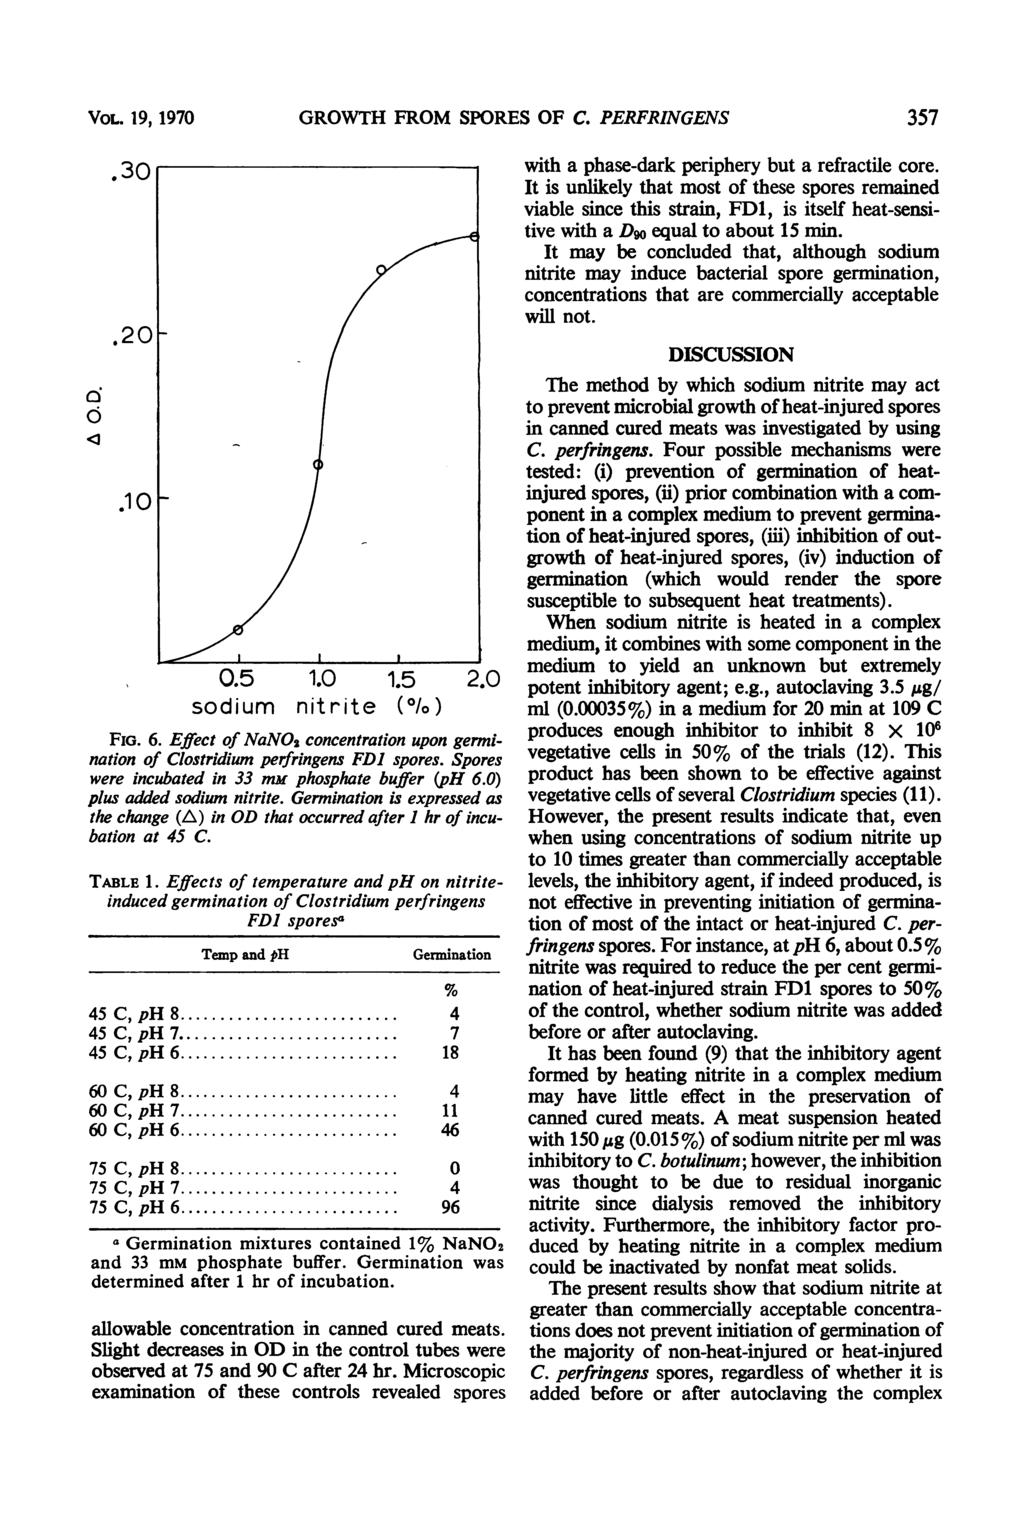 VOL. 19, 1970 GROWTH FROM SPORES OF C. PERFRINGENS 357 ci 0.5 1.0 1.5 2.0 sodium nitrite (0/) FIG. 6. Effect of NaNO, concentration upon germination of Clostridium perfringens FDI spores.